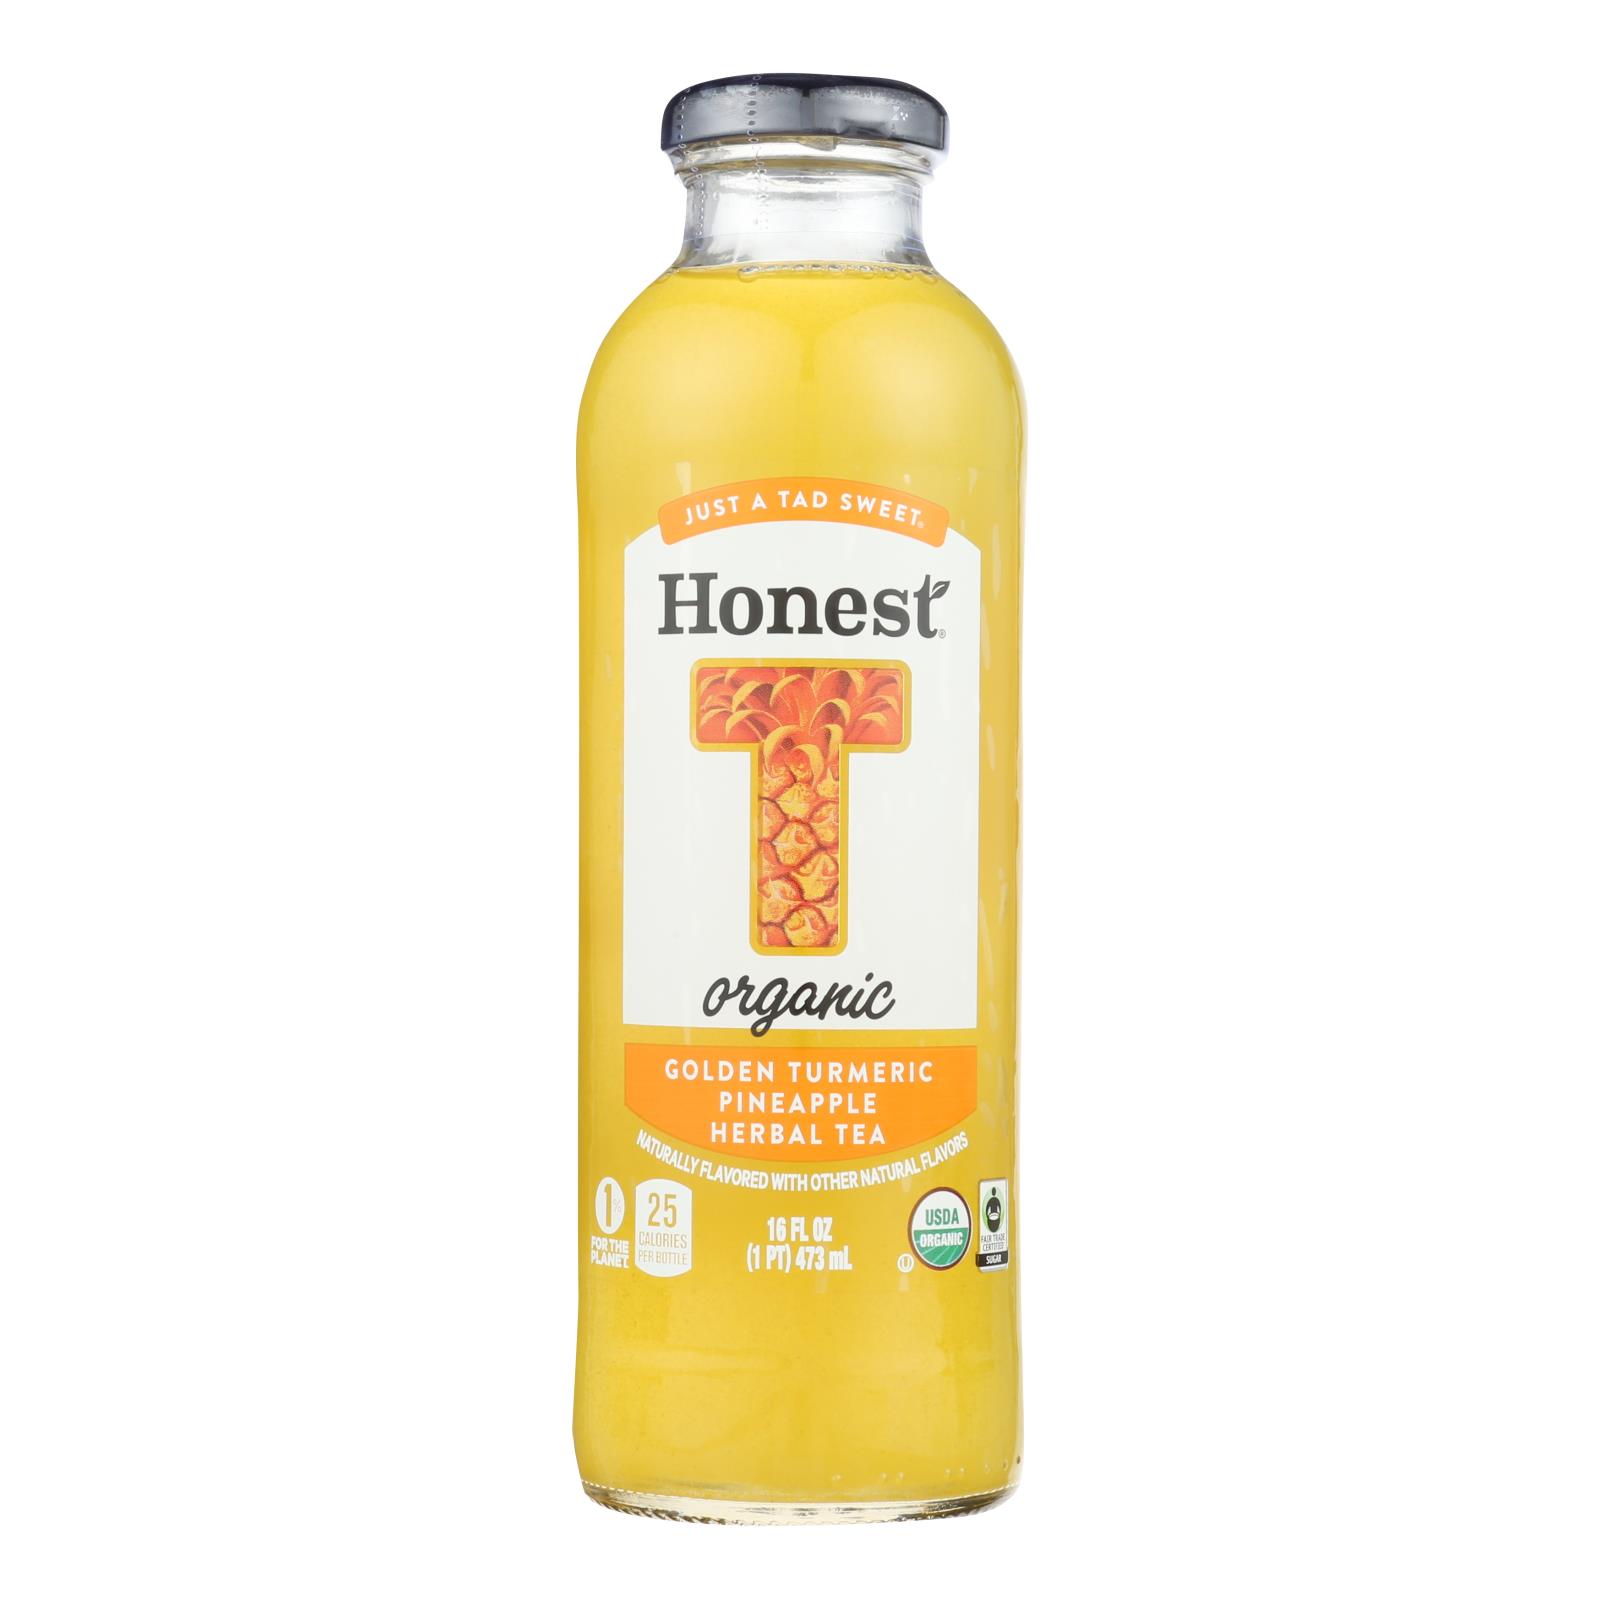 Honest Organic Golden Turmeric Pineapple Hearbal Tea - Case of 12 - 16 FZ